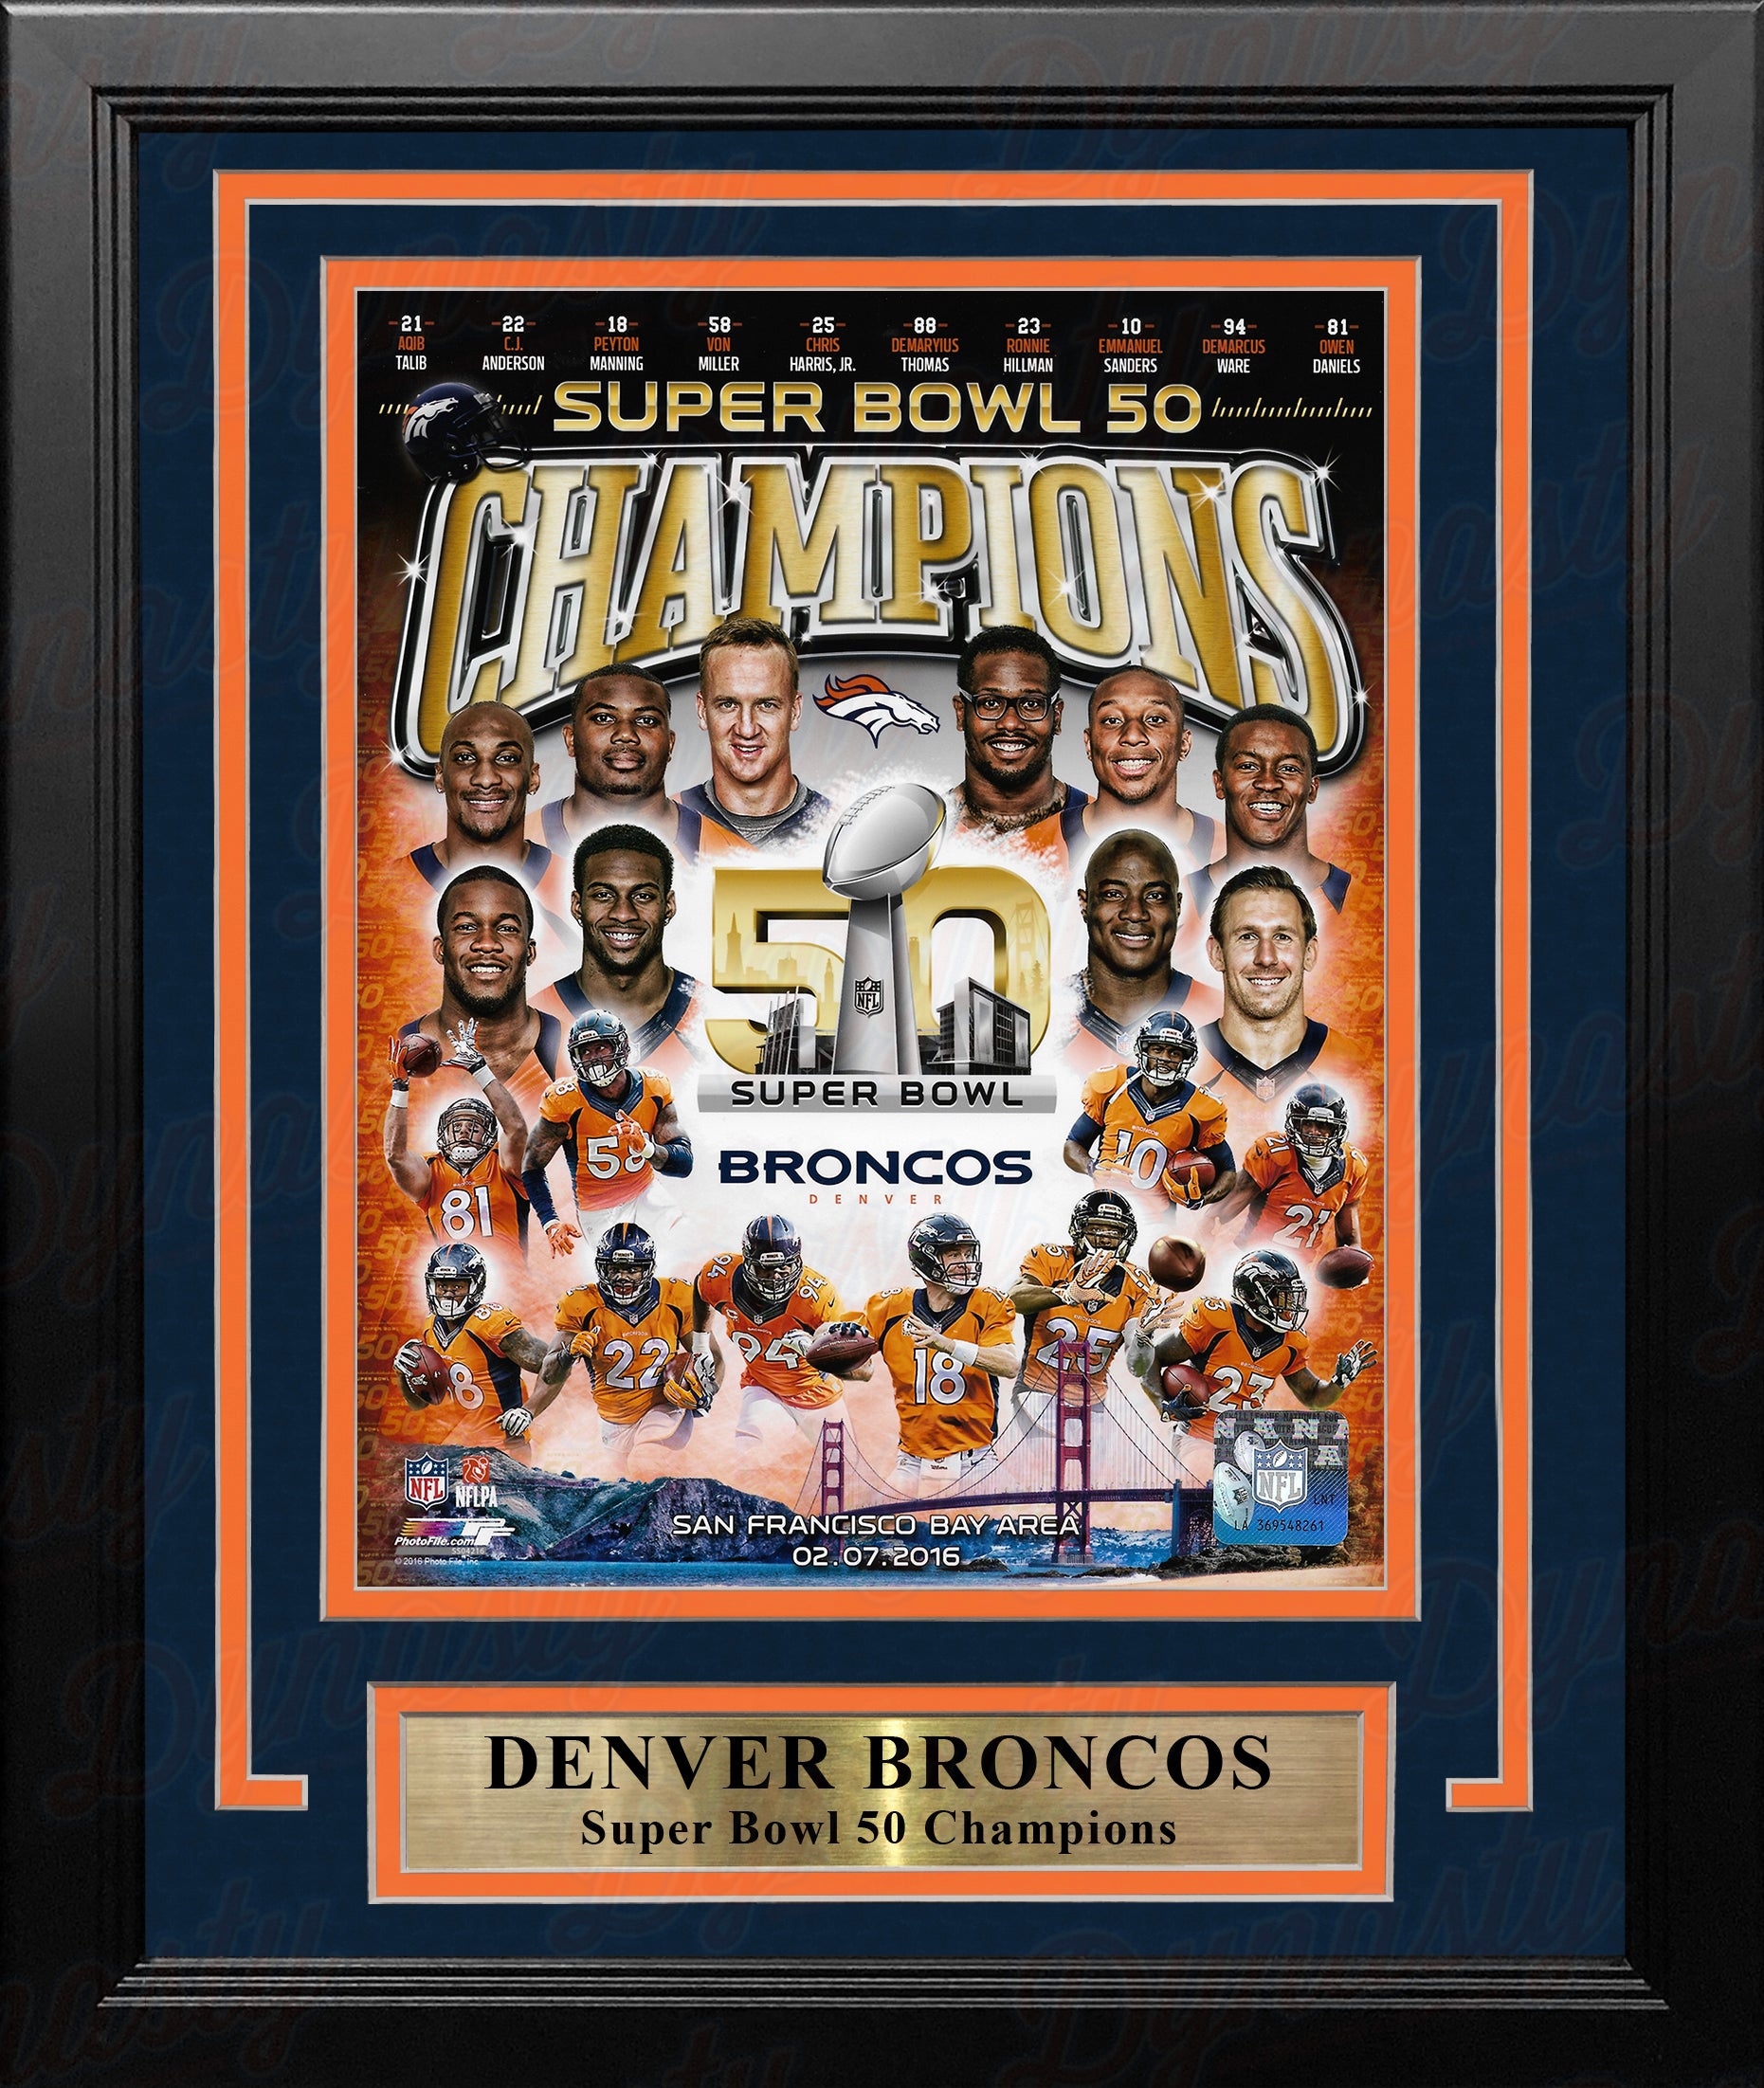 Super Bowl 50 - Denver Broncos Celebration Poster Print - Item #  VARTIARP14119